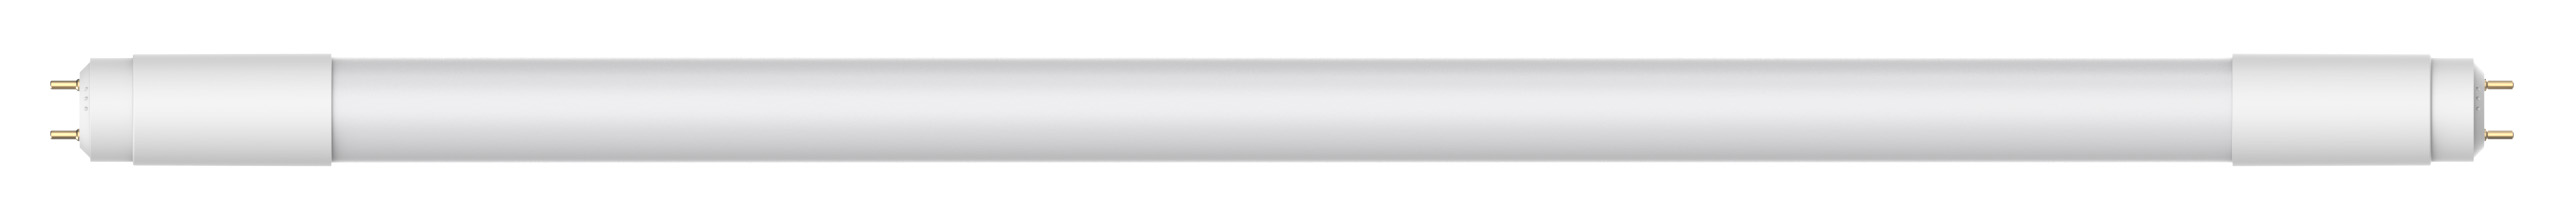 Image of Sylvania 4ft T8 Cool White LED Universal Tube Light